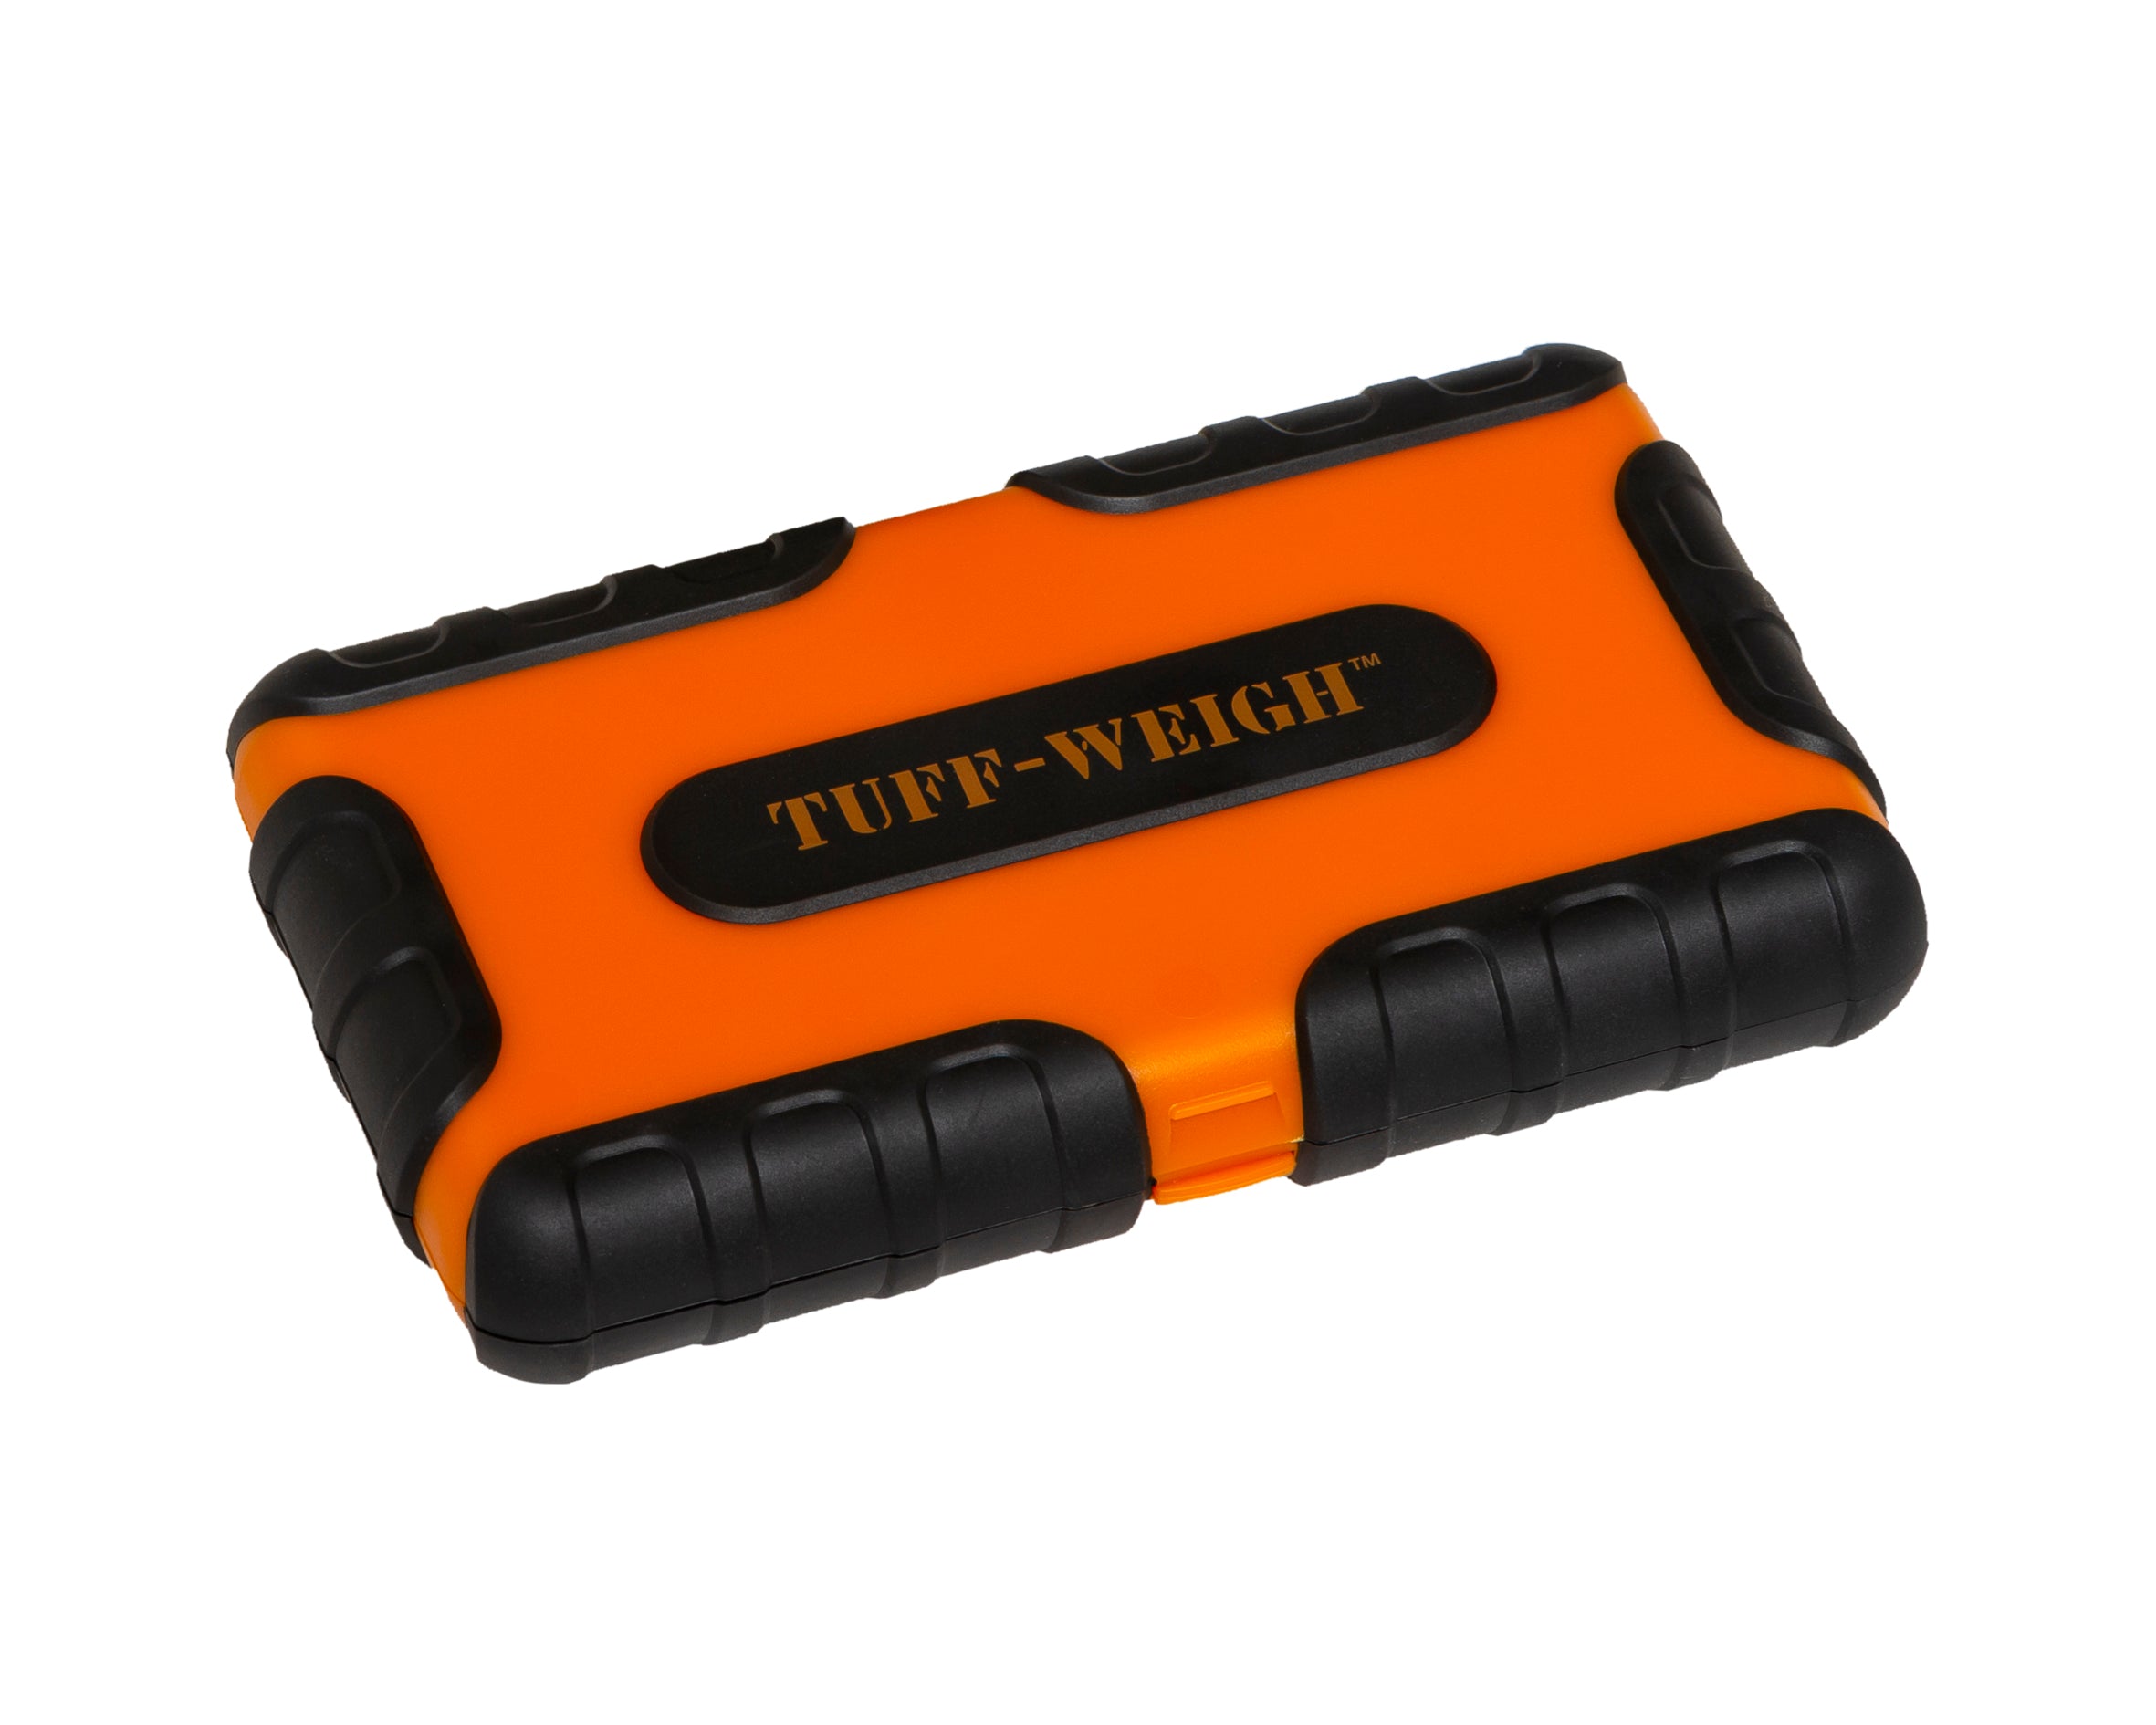 TUF-200-OR On Balance Tuff-Weigh Pocket Scale - Orange 200g x 0.01g